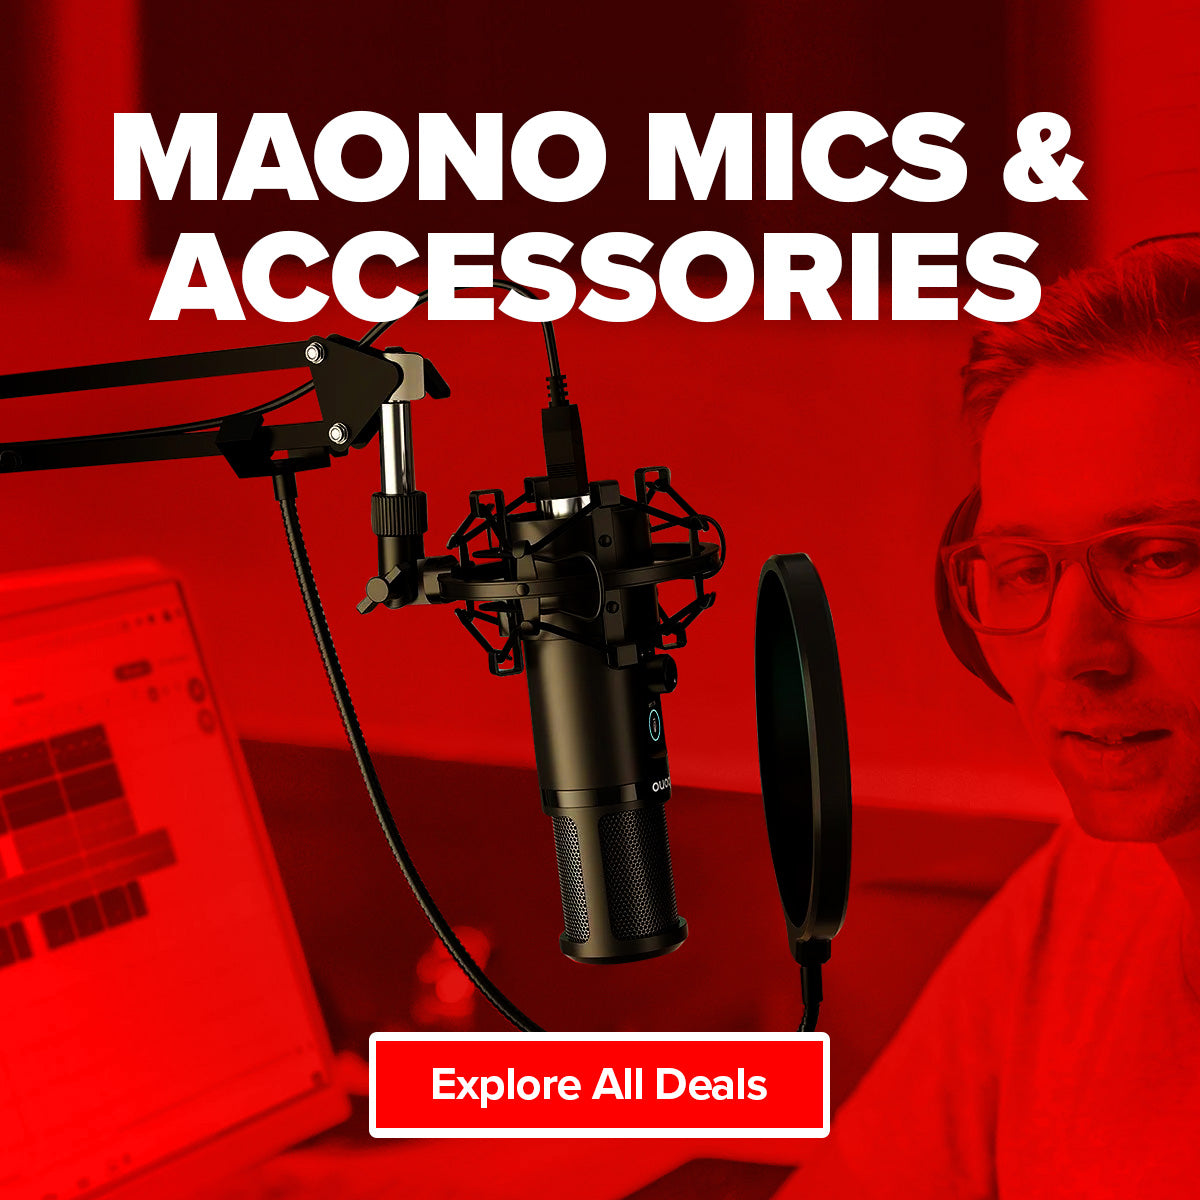 14% off Maono microphones & accessories in Maplin's Valentine's Day Sale!